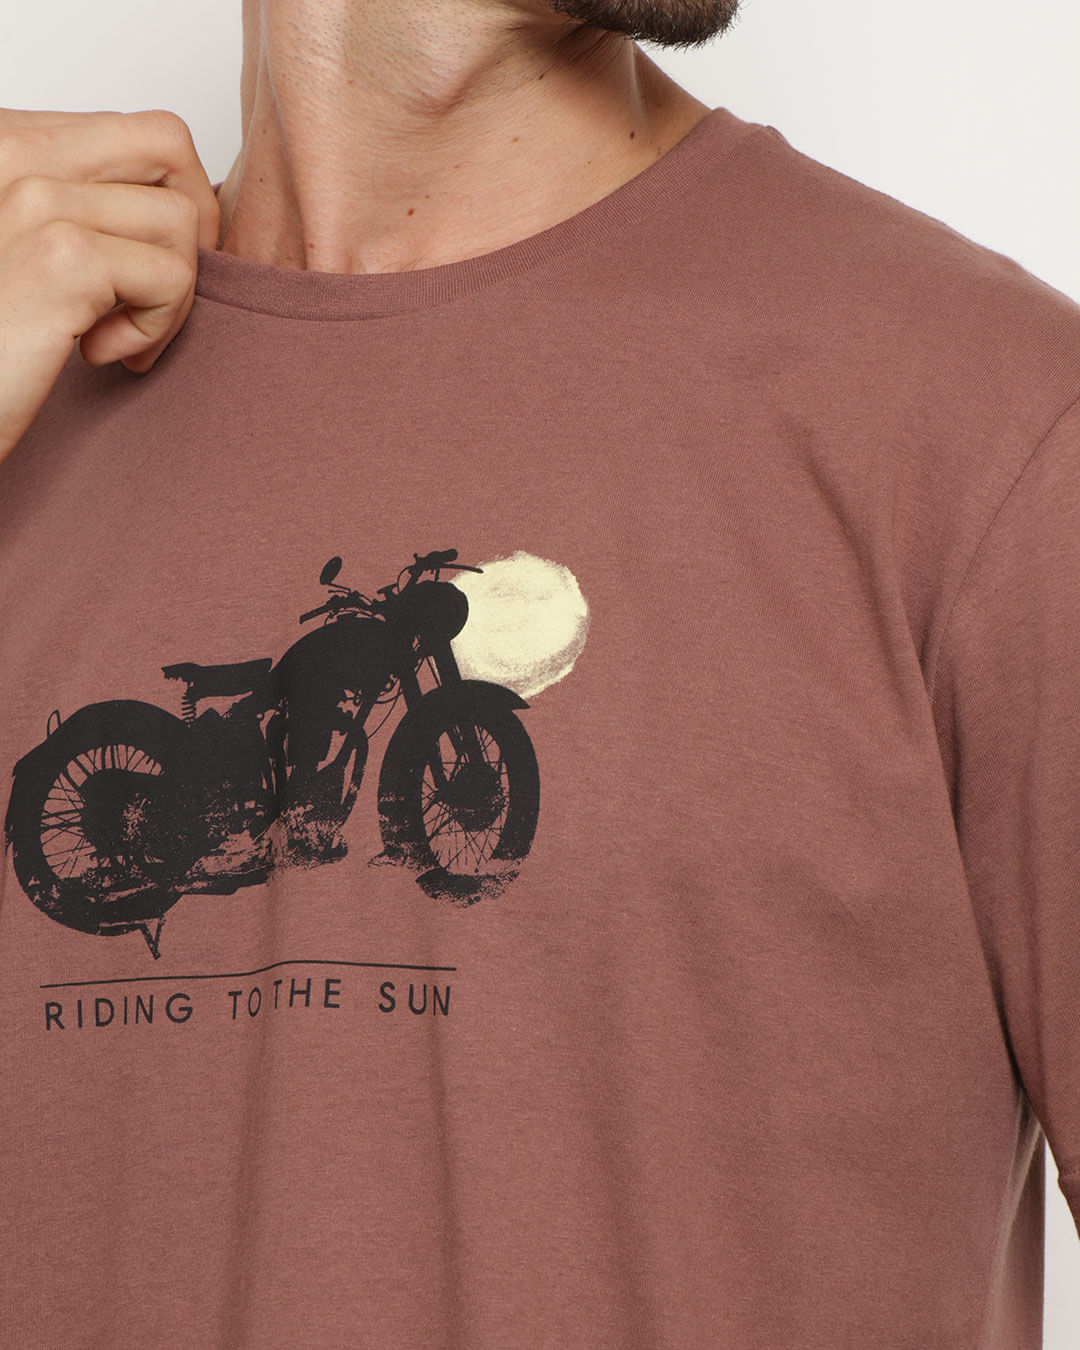 Camiseta-106-The-Sun-Marrom-Pgg---Marrom-Medio